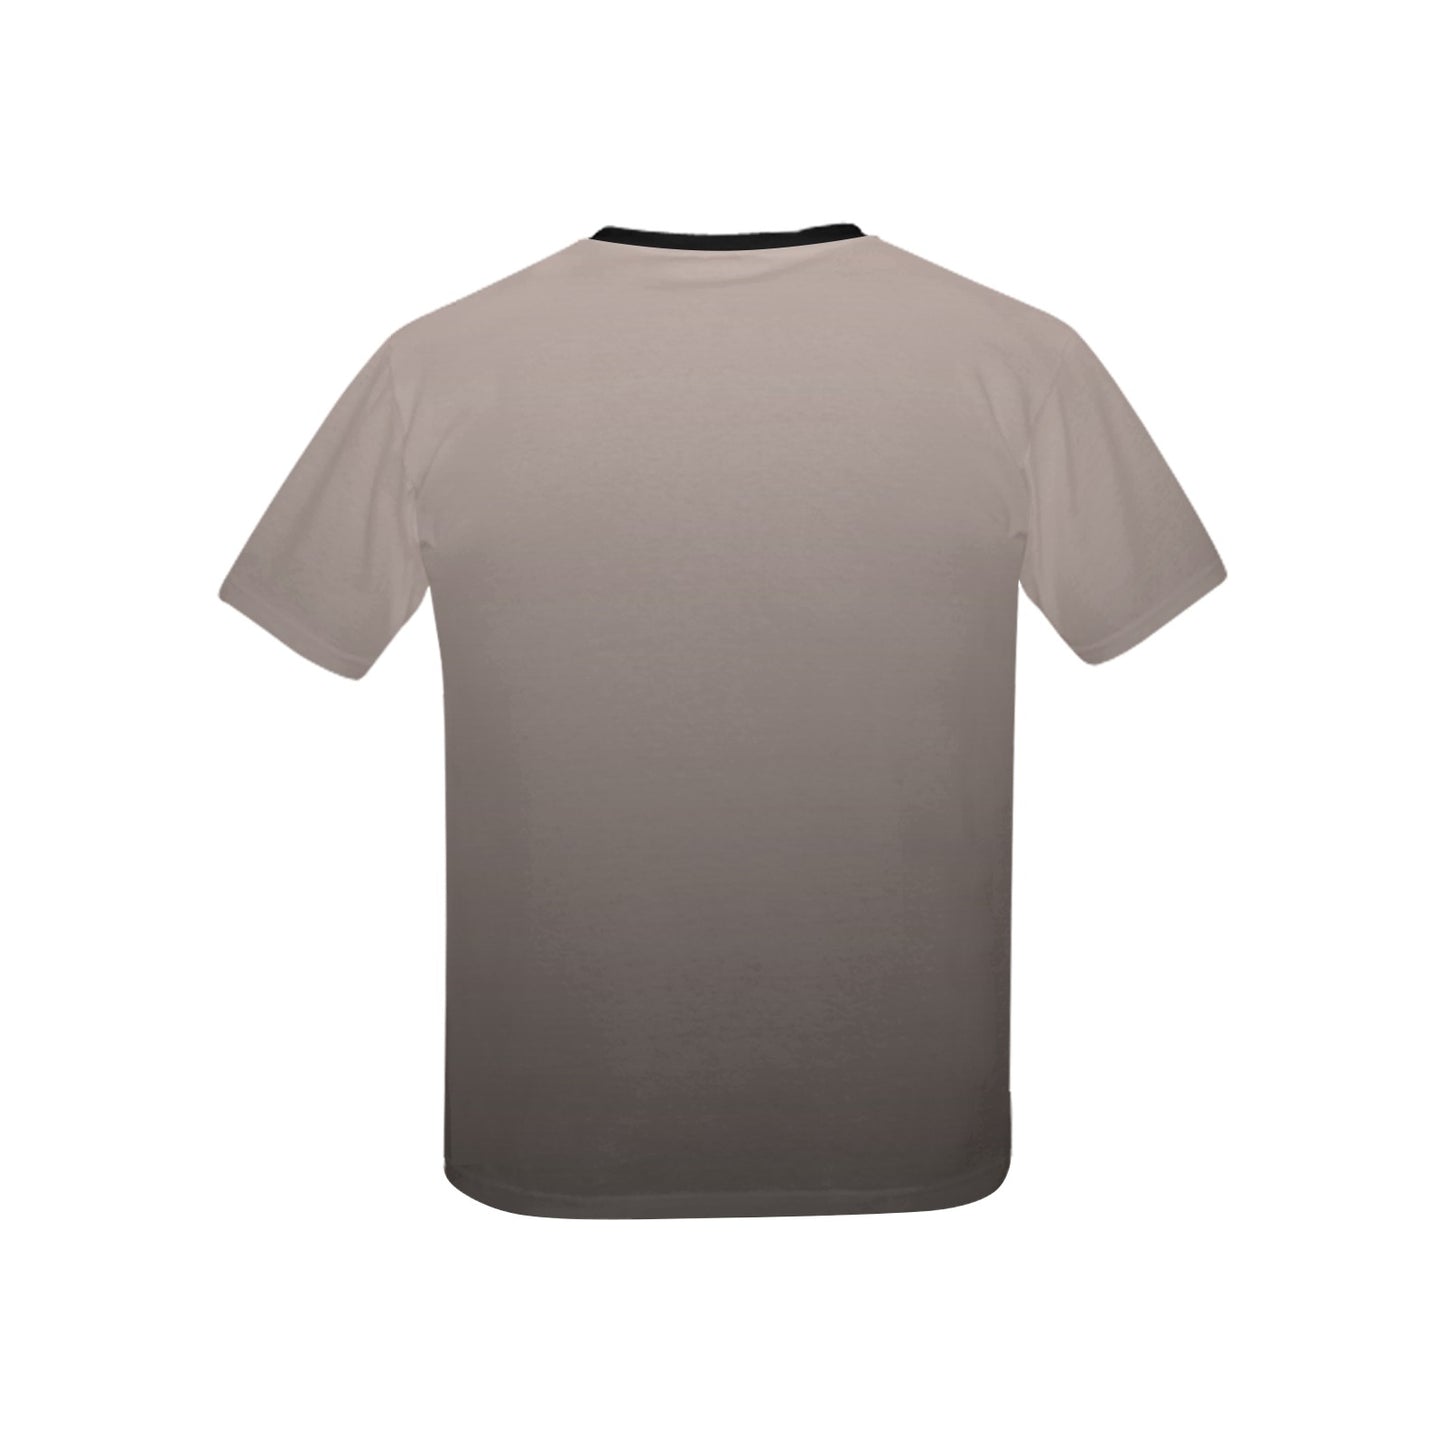 Duntalk "Leather" Youth Basketball T-shirt - Tan